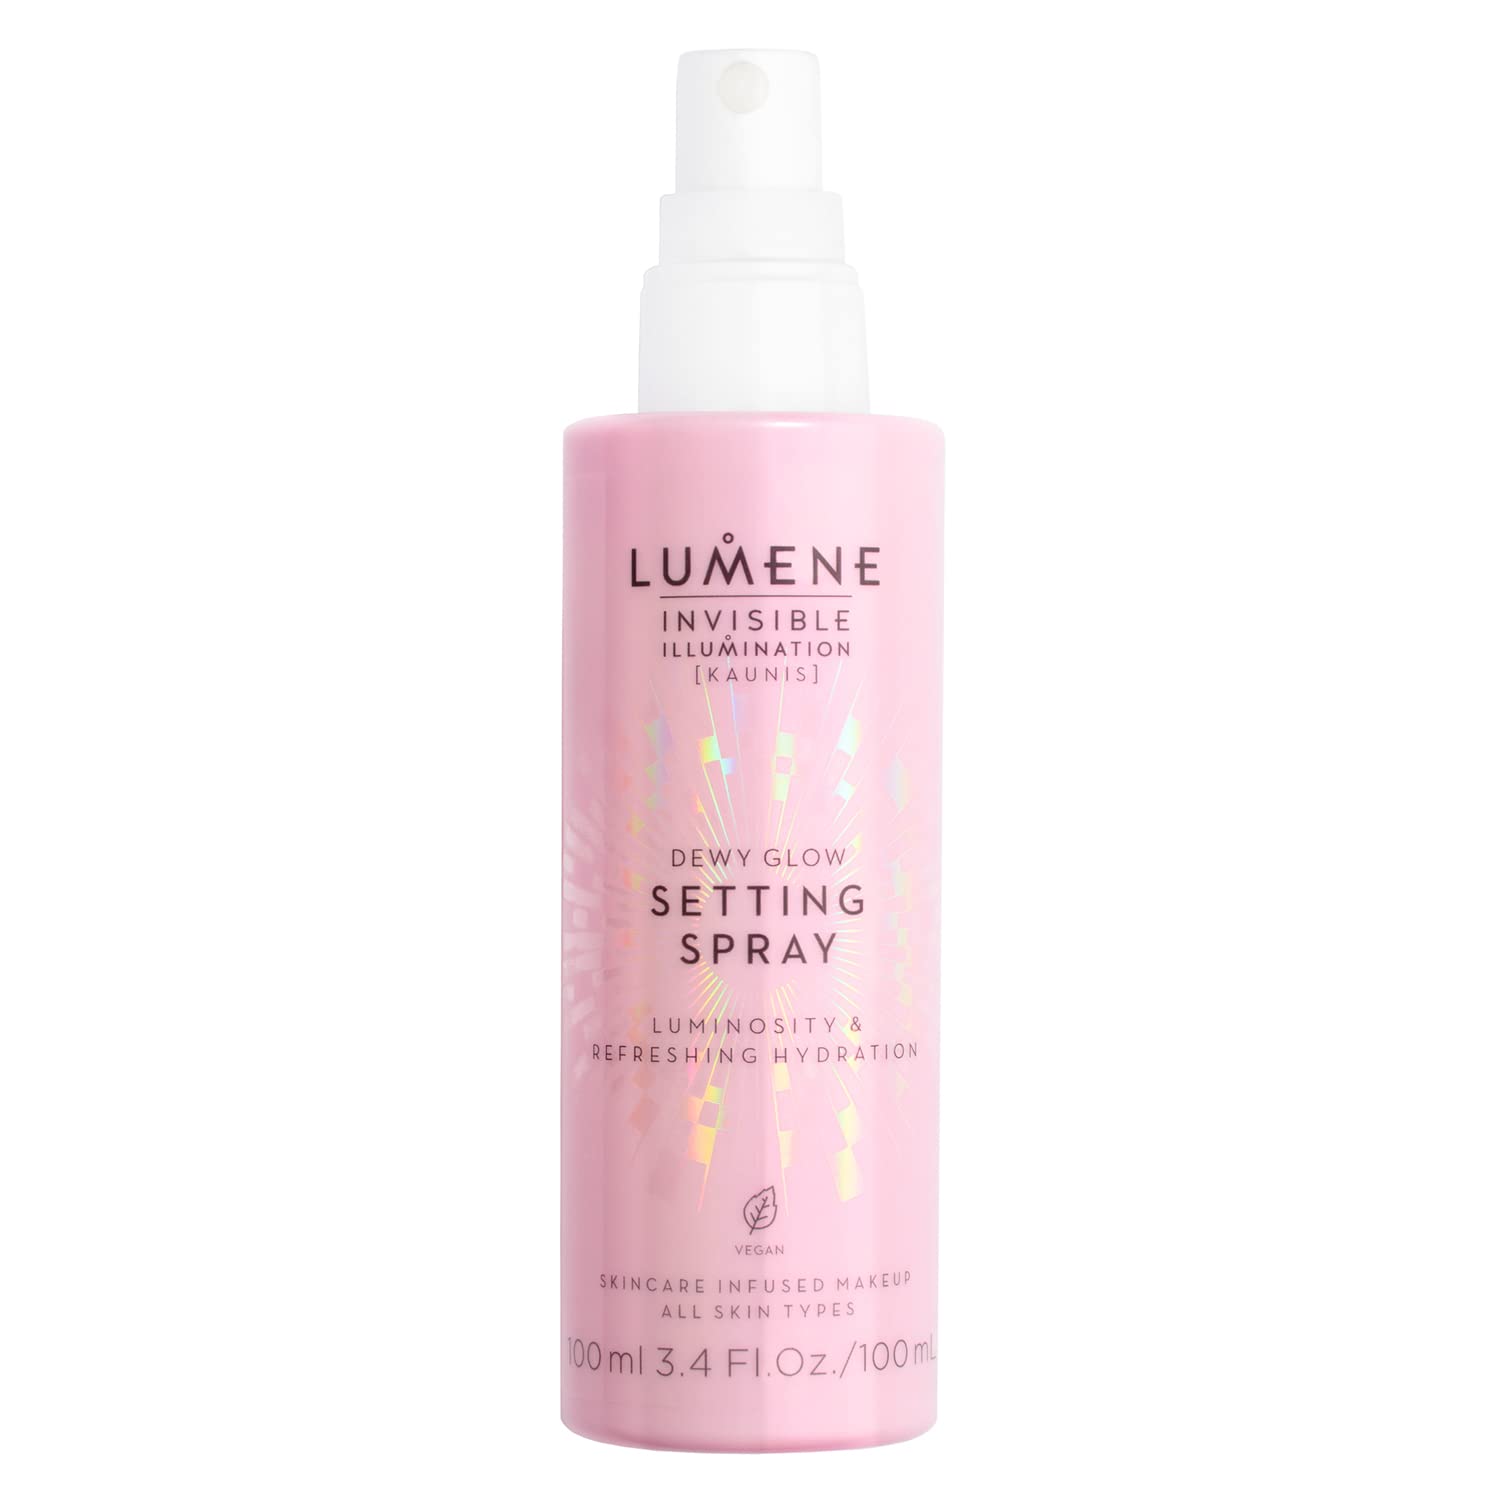 Lumene Invisible Illumination Dewy Glow Setting Spray - Facial Spray for All Skin Types - Makeup Primer & Dewy Setting Spray - Refreshing Face Mist (3.4 fl oz)